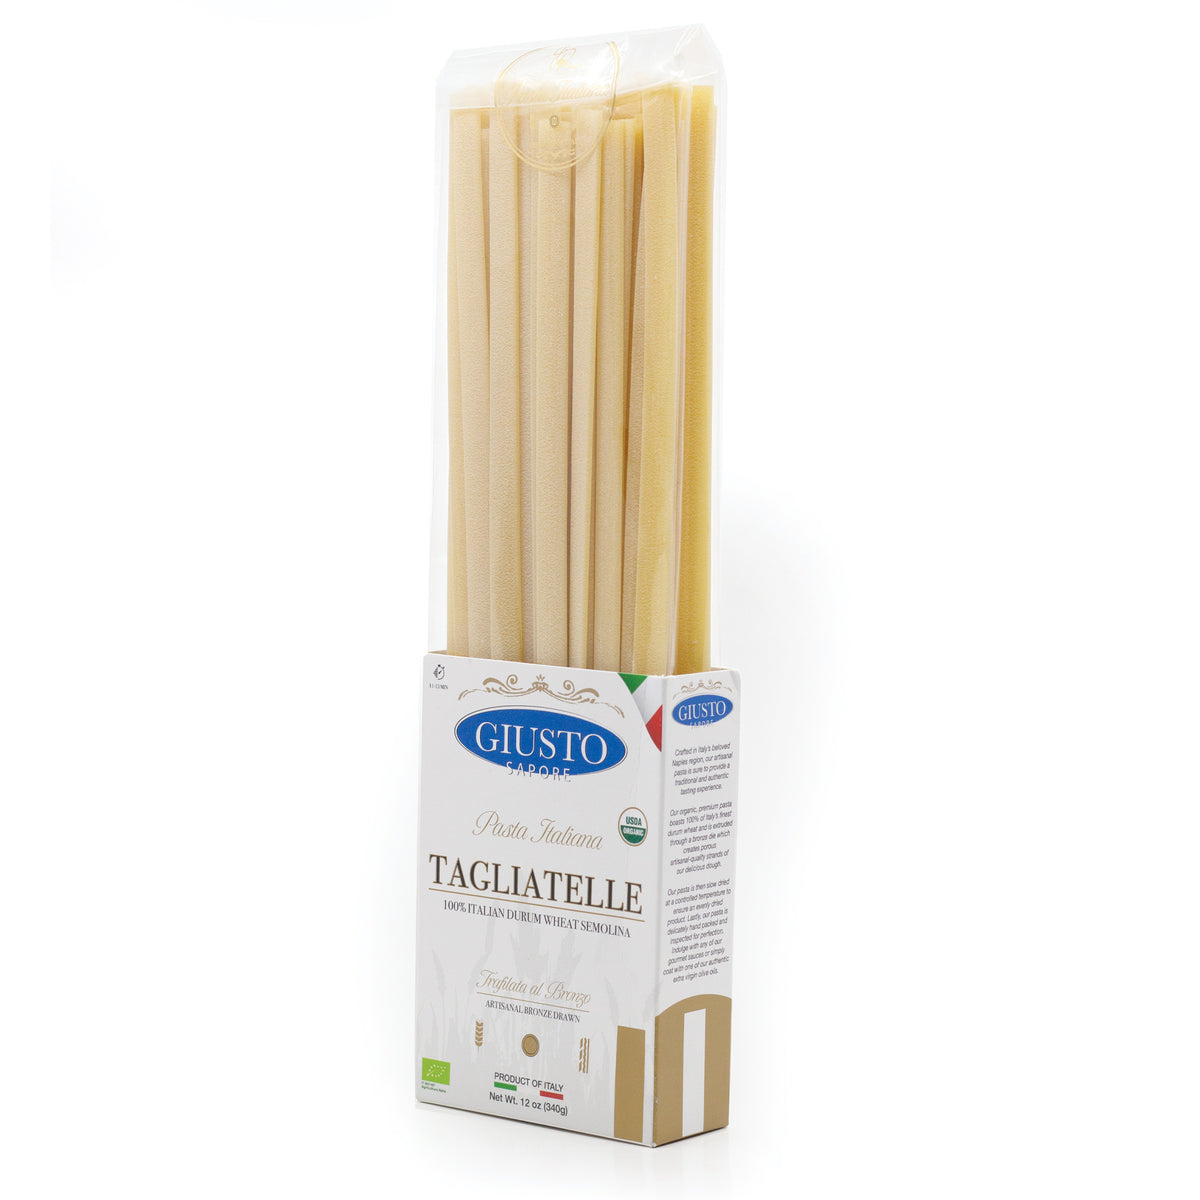 Organic Tagliatelle Italian Pasta - 12oz